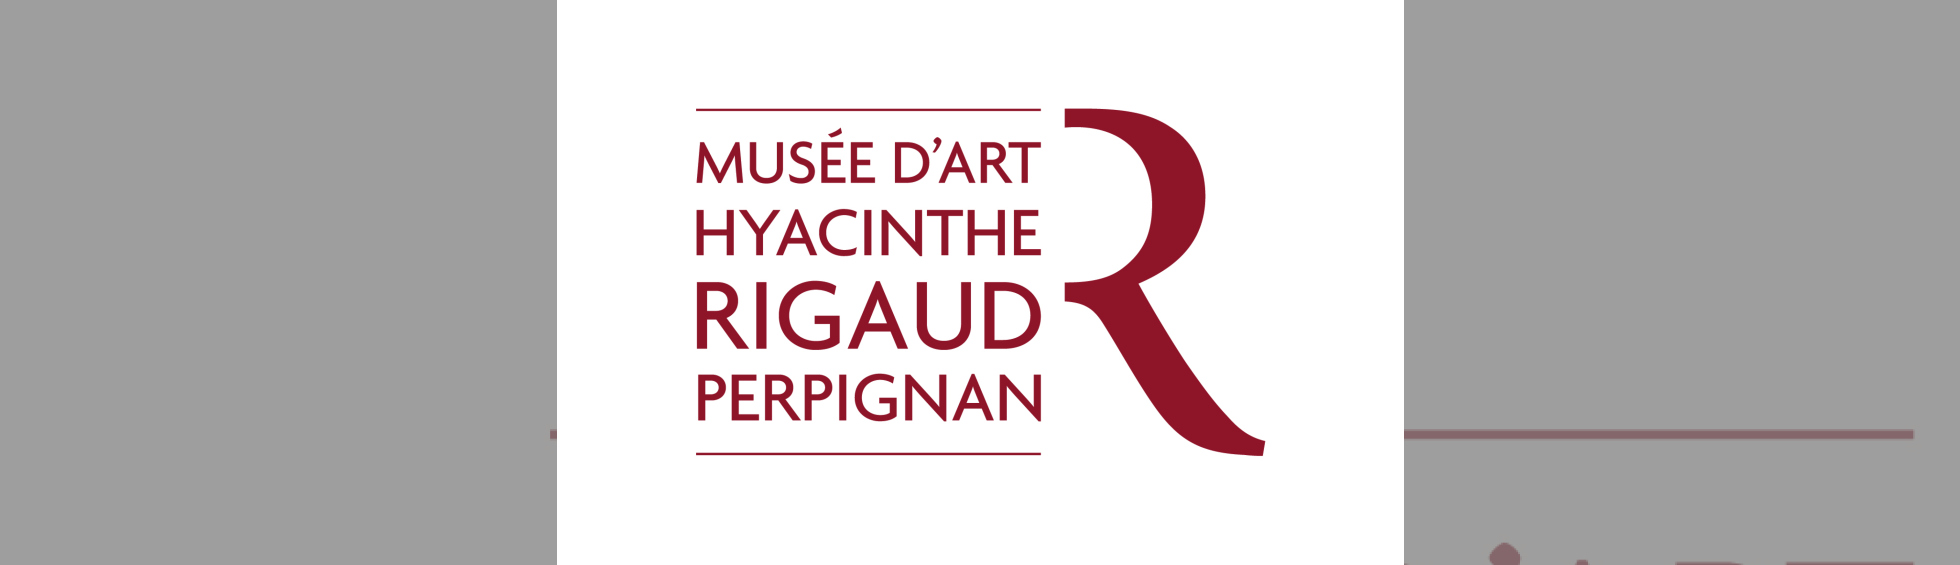 logo - Musée Rigaud 